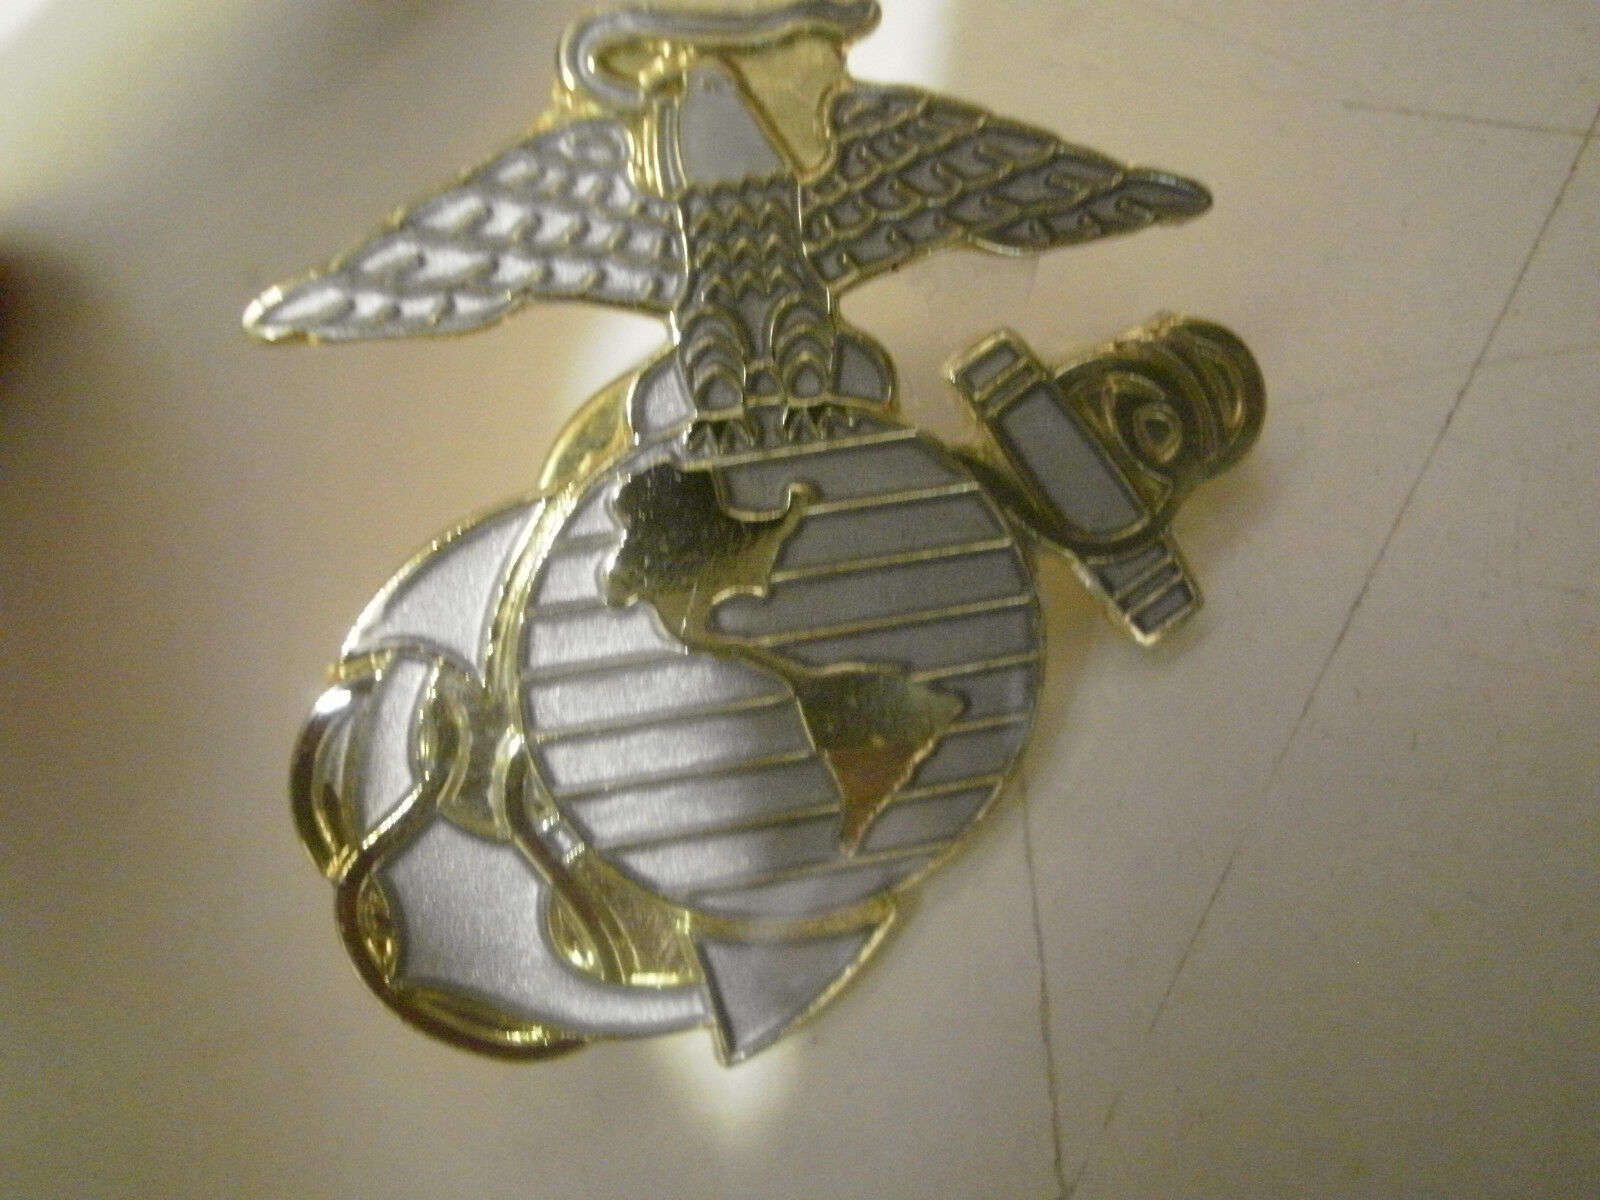 Marine corps tie tac